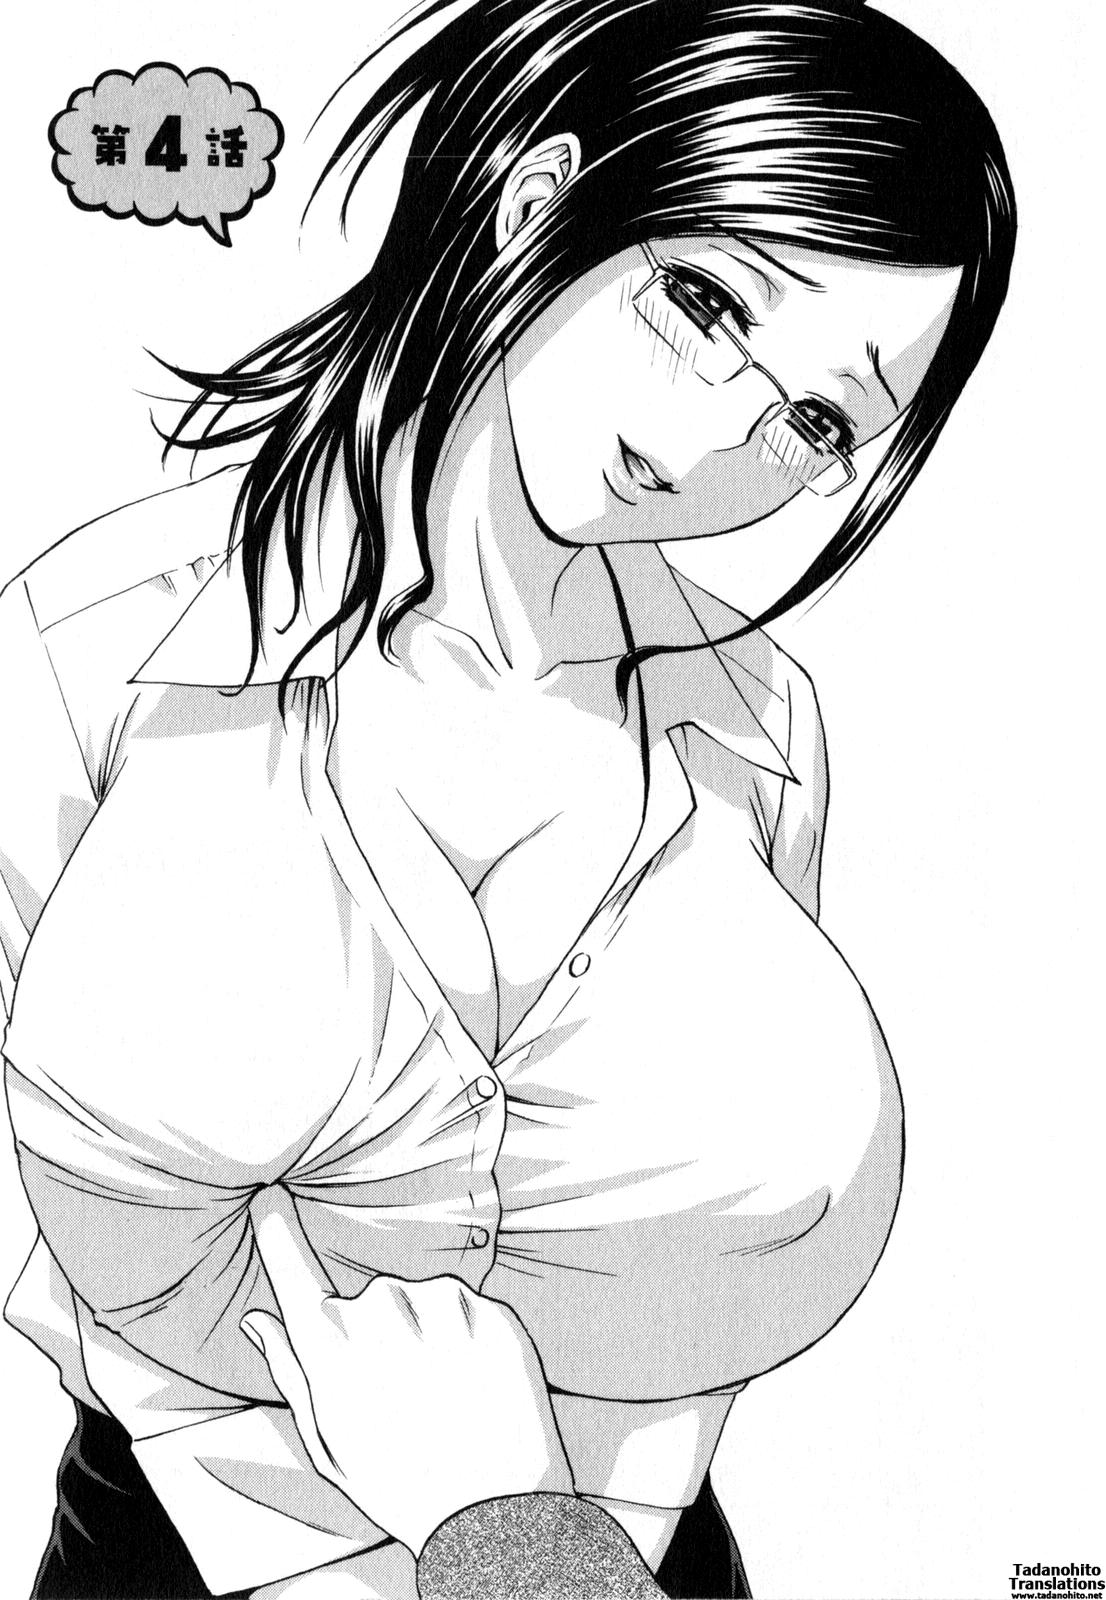 [Hidemaru] Life with Married Women Just Like a Manga 2 - Ch. 1-4 [English] {Tadanohito} 67